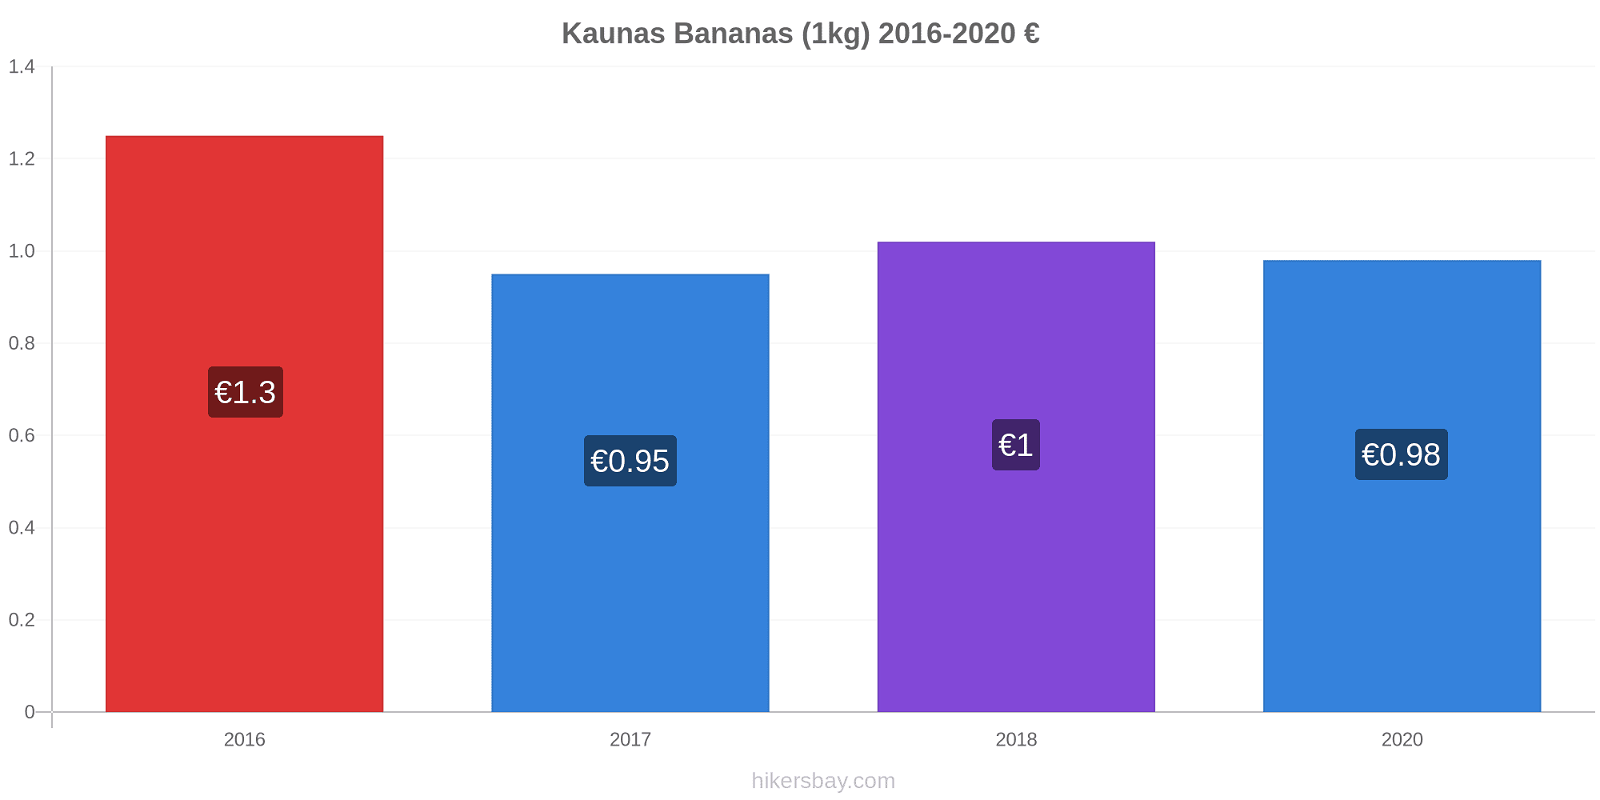 Kaunas price changes Bananas (1kg) hikersbay.com